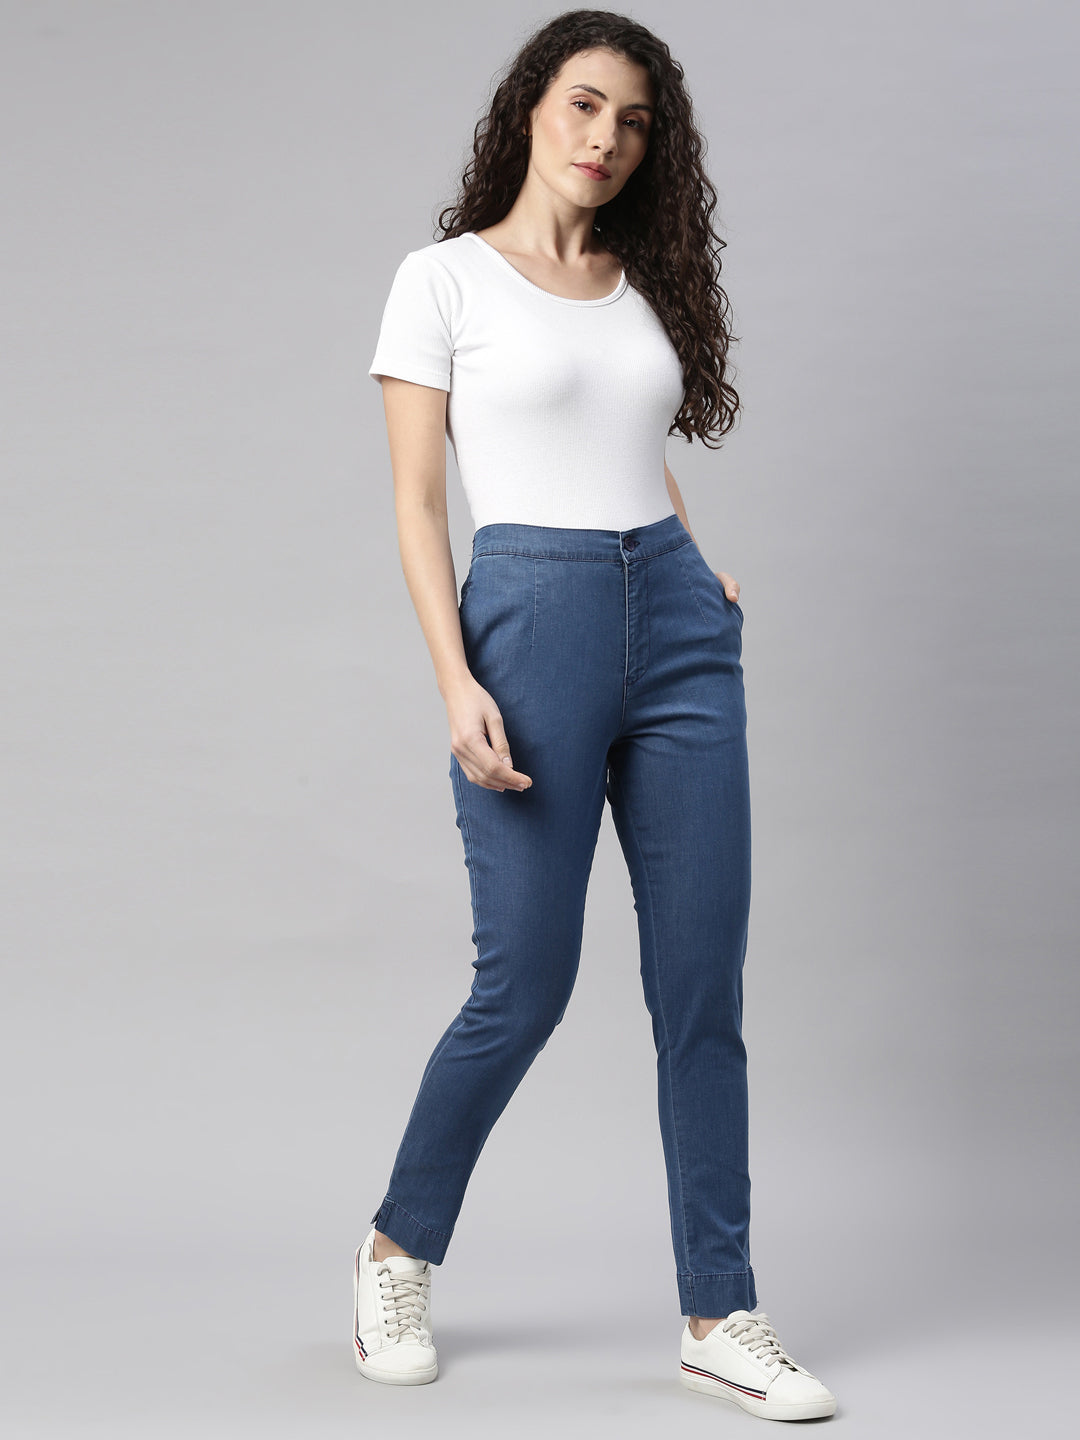 GO COLORS Slim Fit Women Grey Trousers - Buy GO COLORS Slim Fit